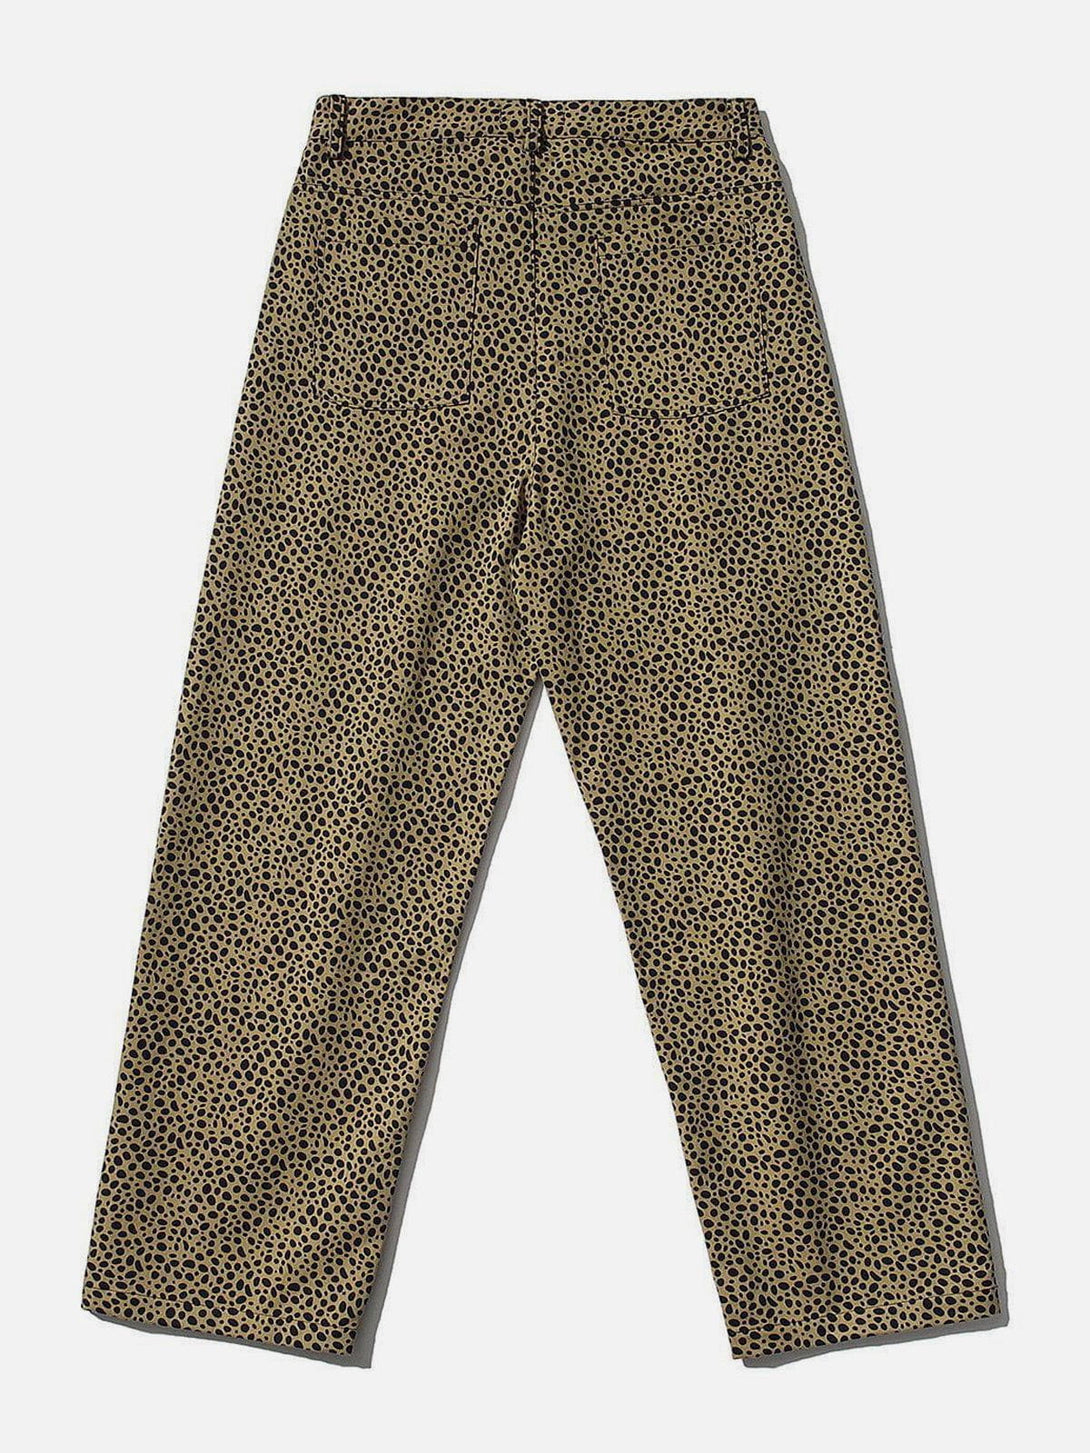 Majesda® - Vintage Full Print Leopard Print Long Pants outfit ideas streetwear fashion